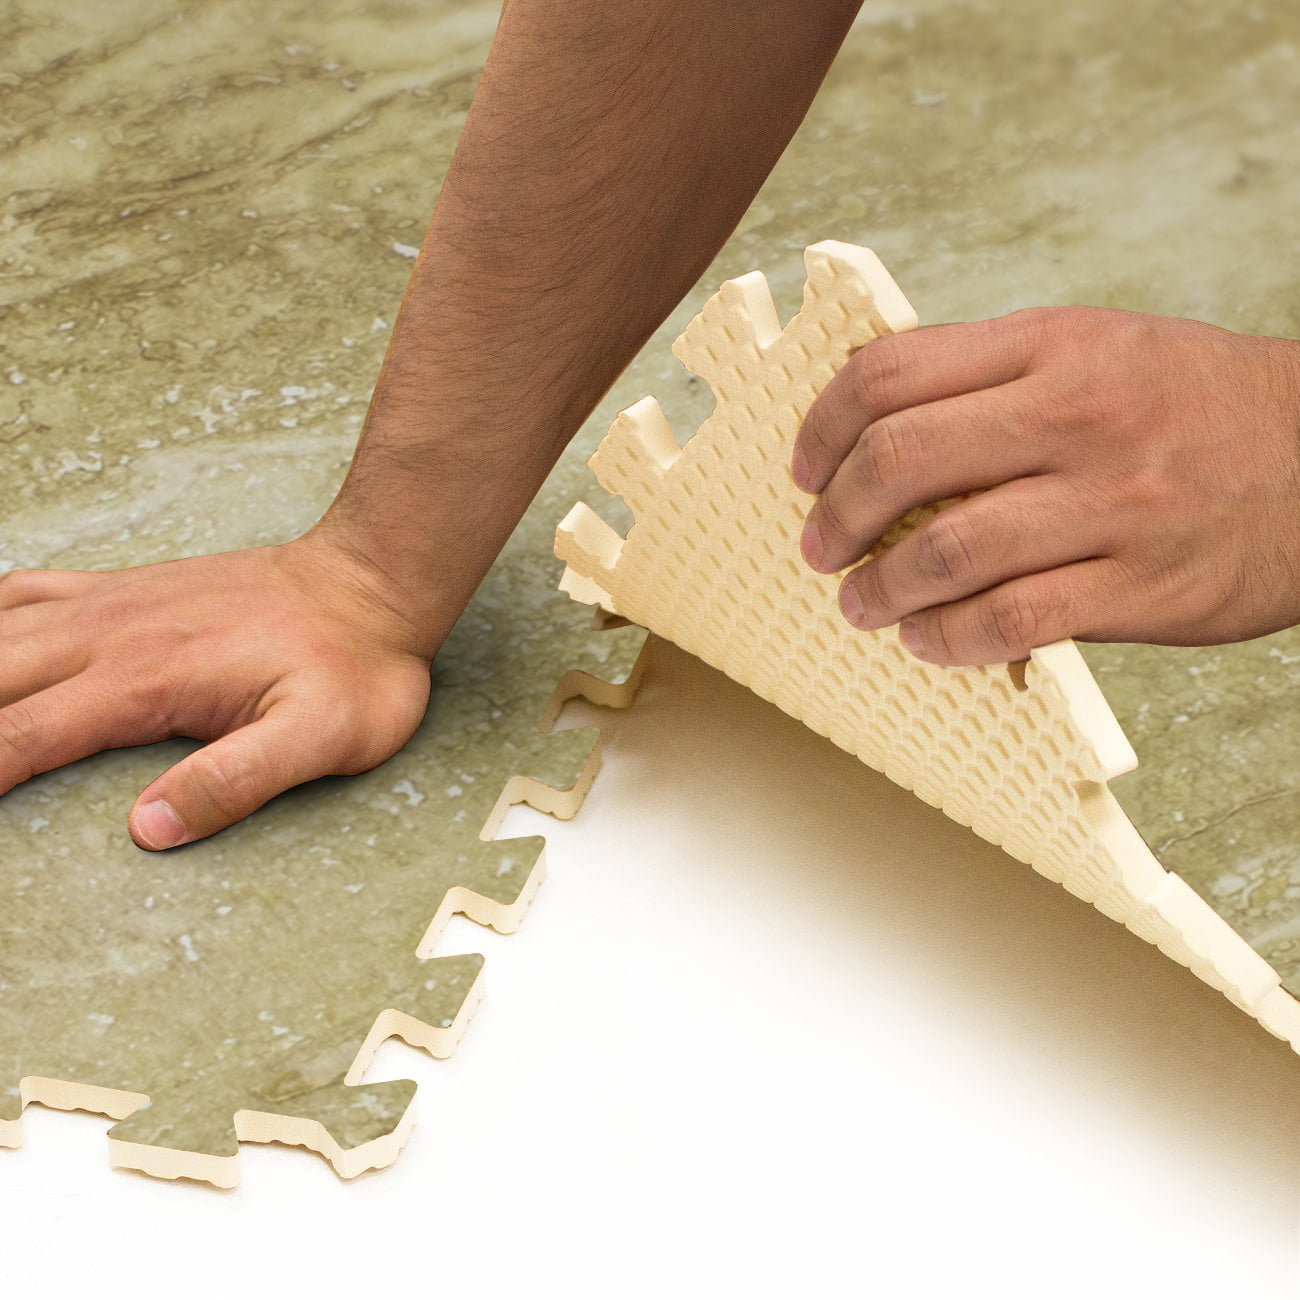 32 Pcs Wood Grain Mats Foam Tiles Interlocking Foam Floor Mats for Kids  Adults Playroom Bedroom Farmhouse Flooring, 11.8 x 11.8 Inch(Gray)